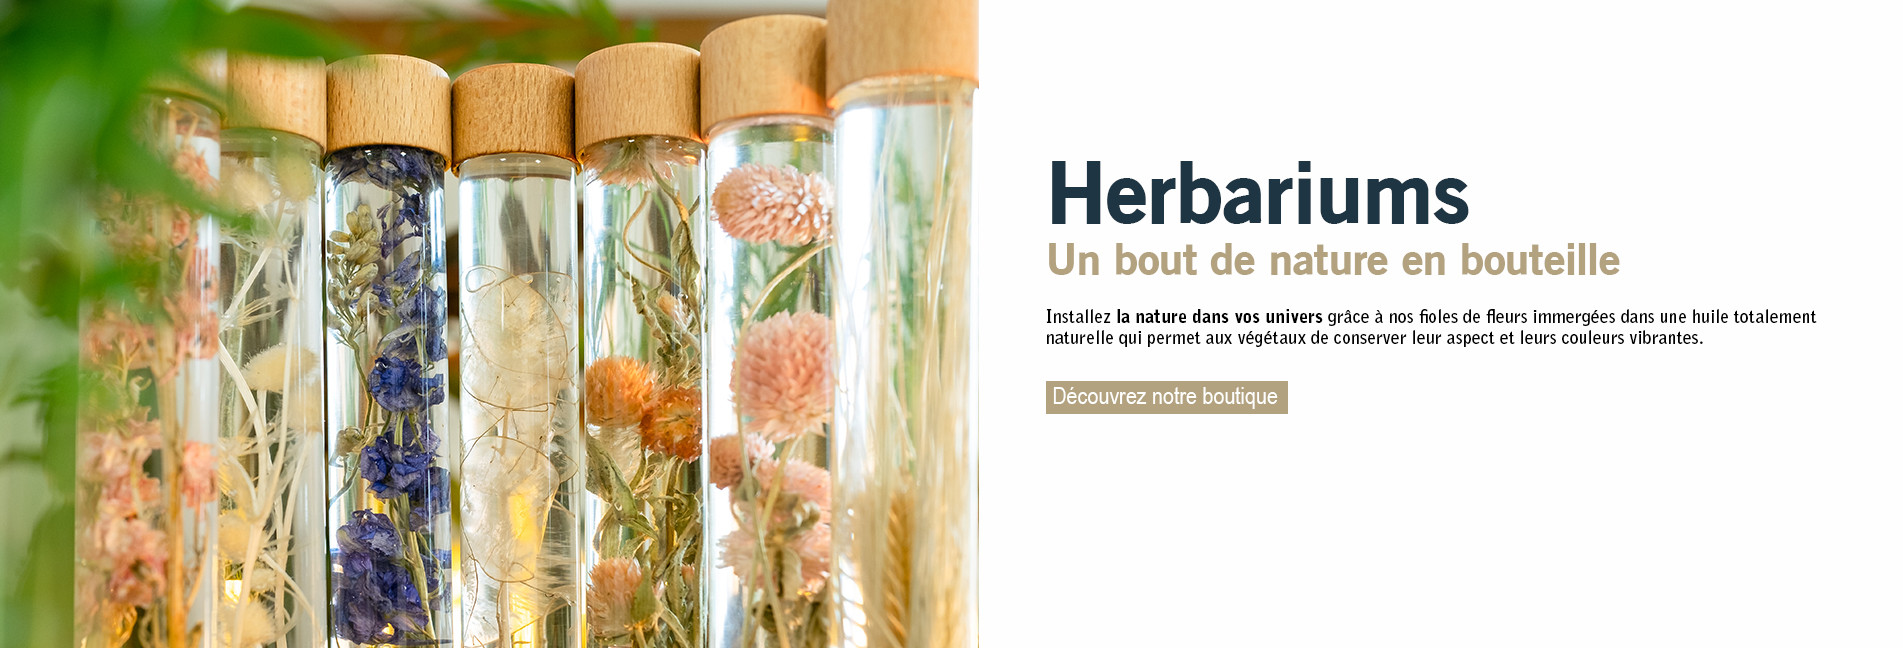 Herbariums